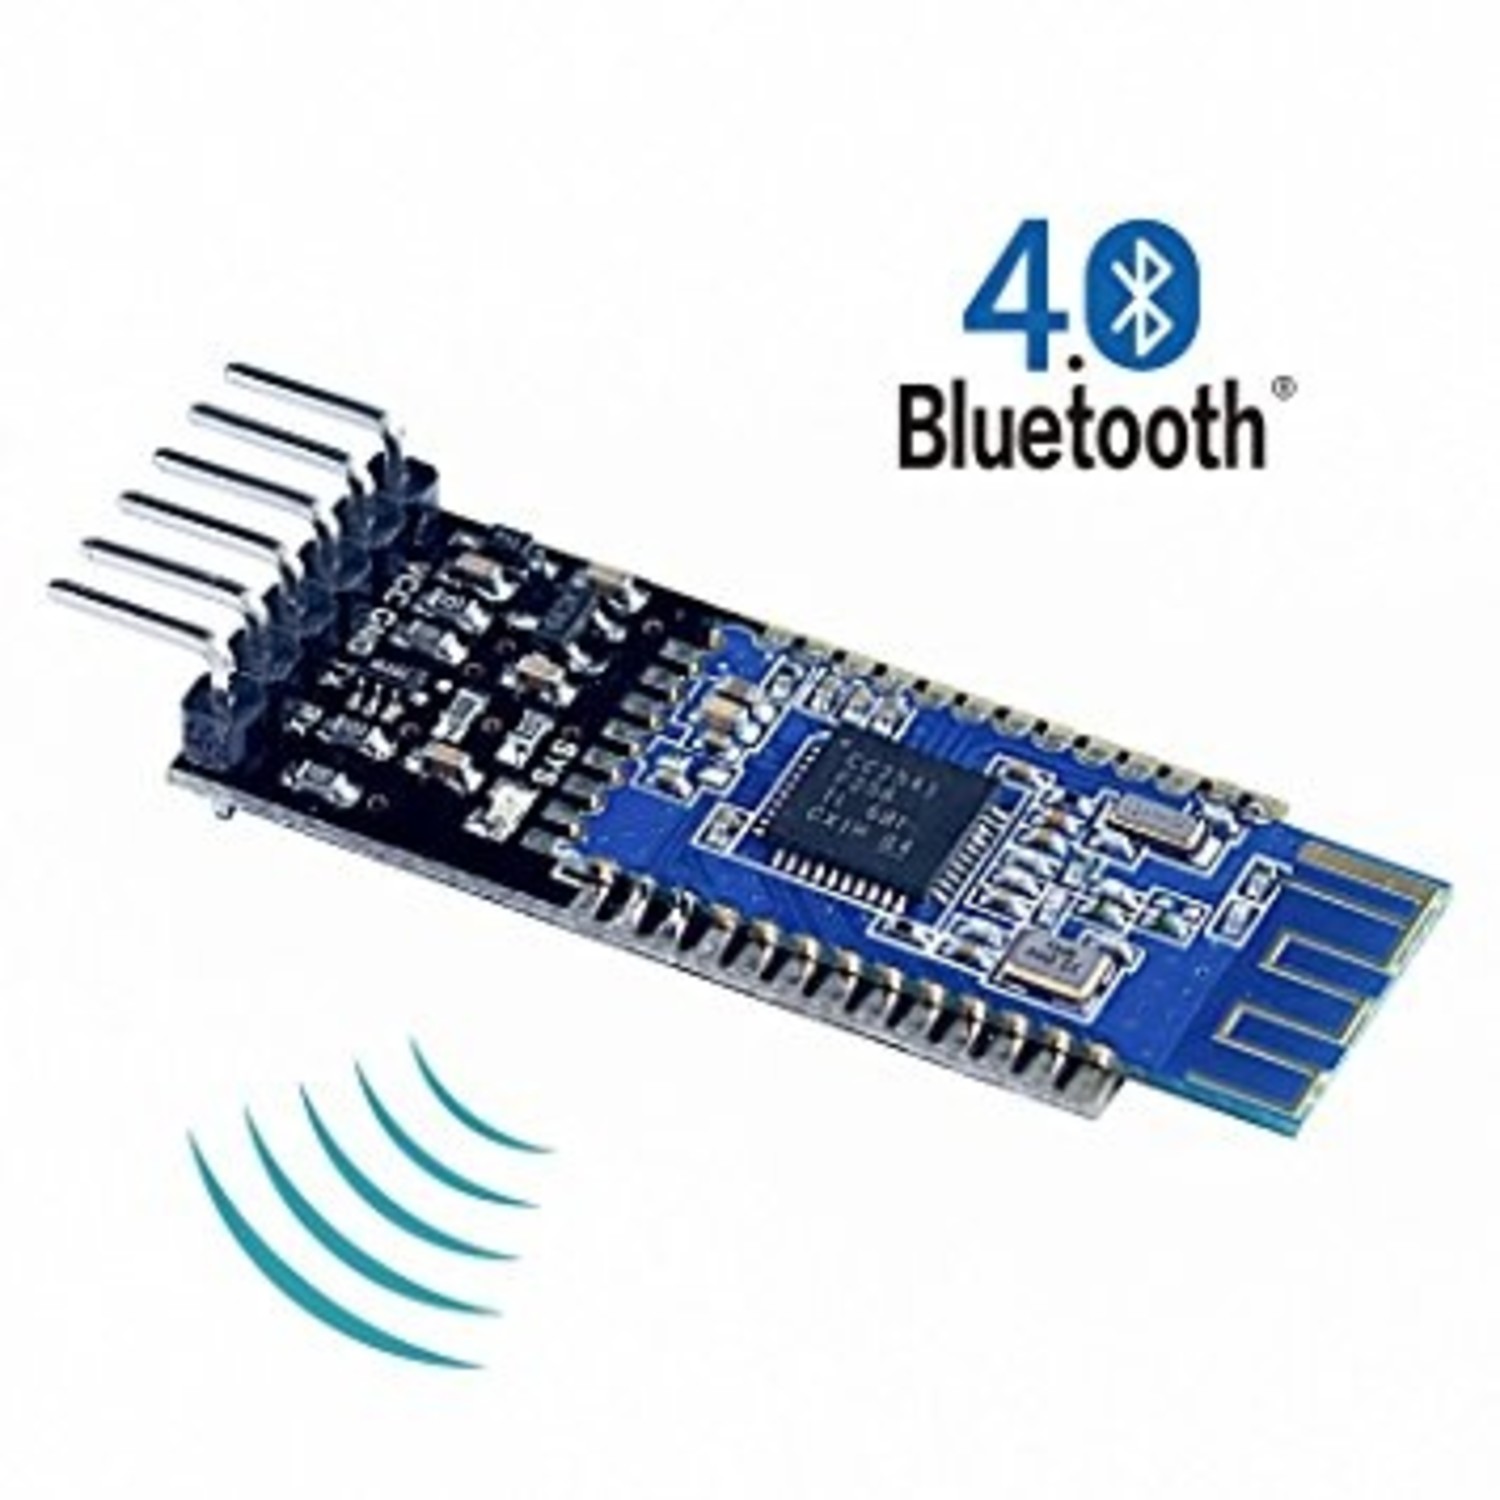 Dreigend vereist krans HM-10 Bluetooth module - Ben's electronics